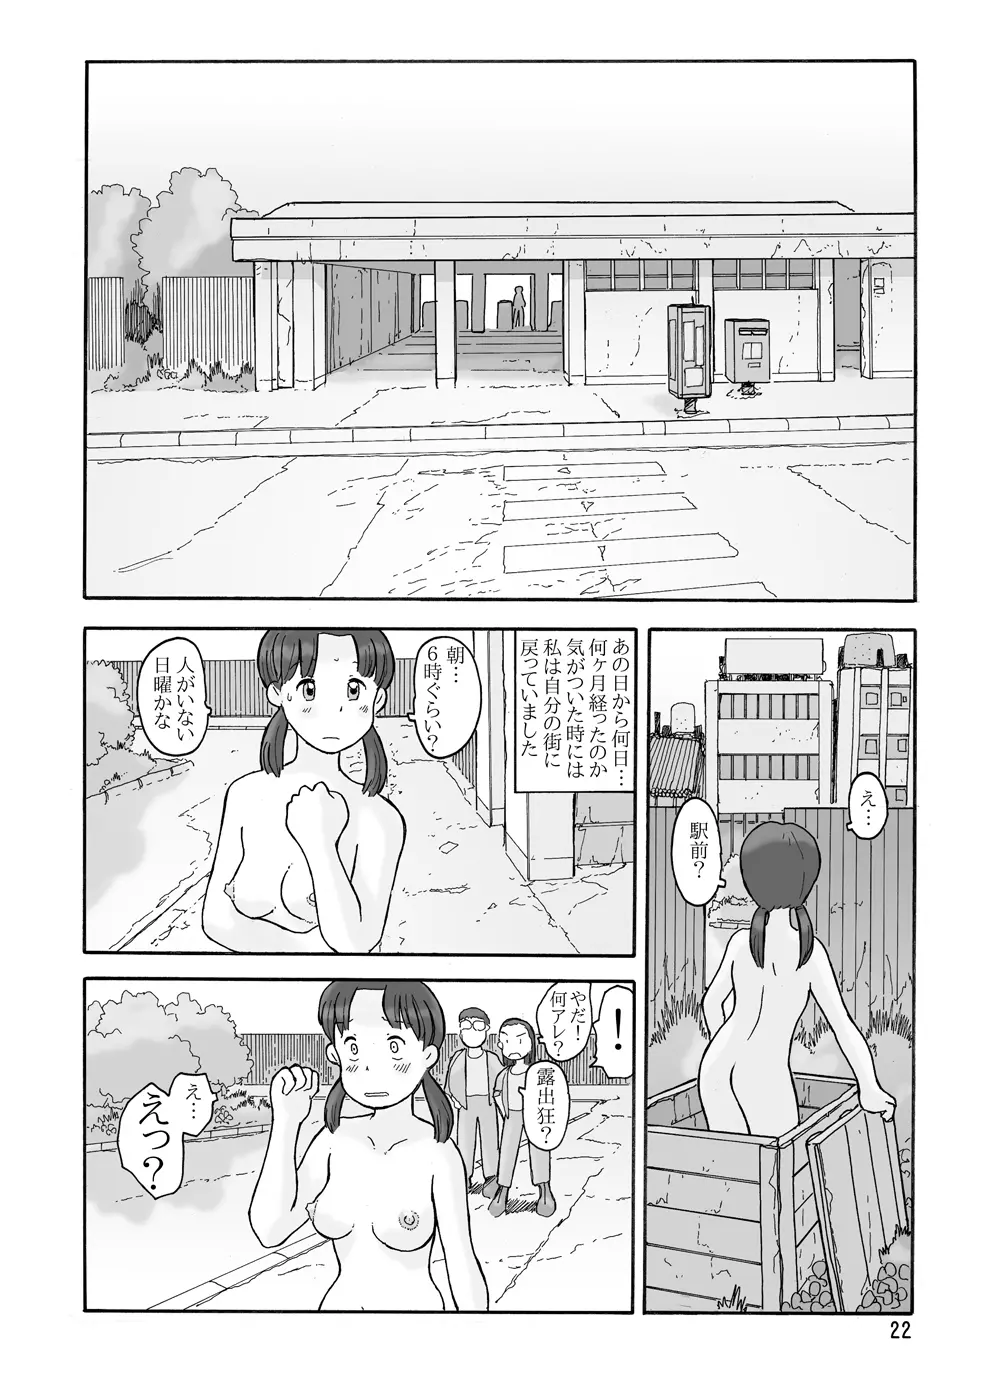 瓜頭 - page21